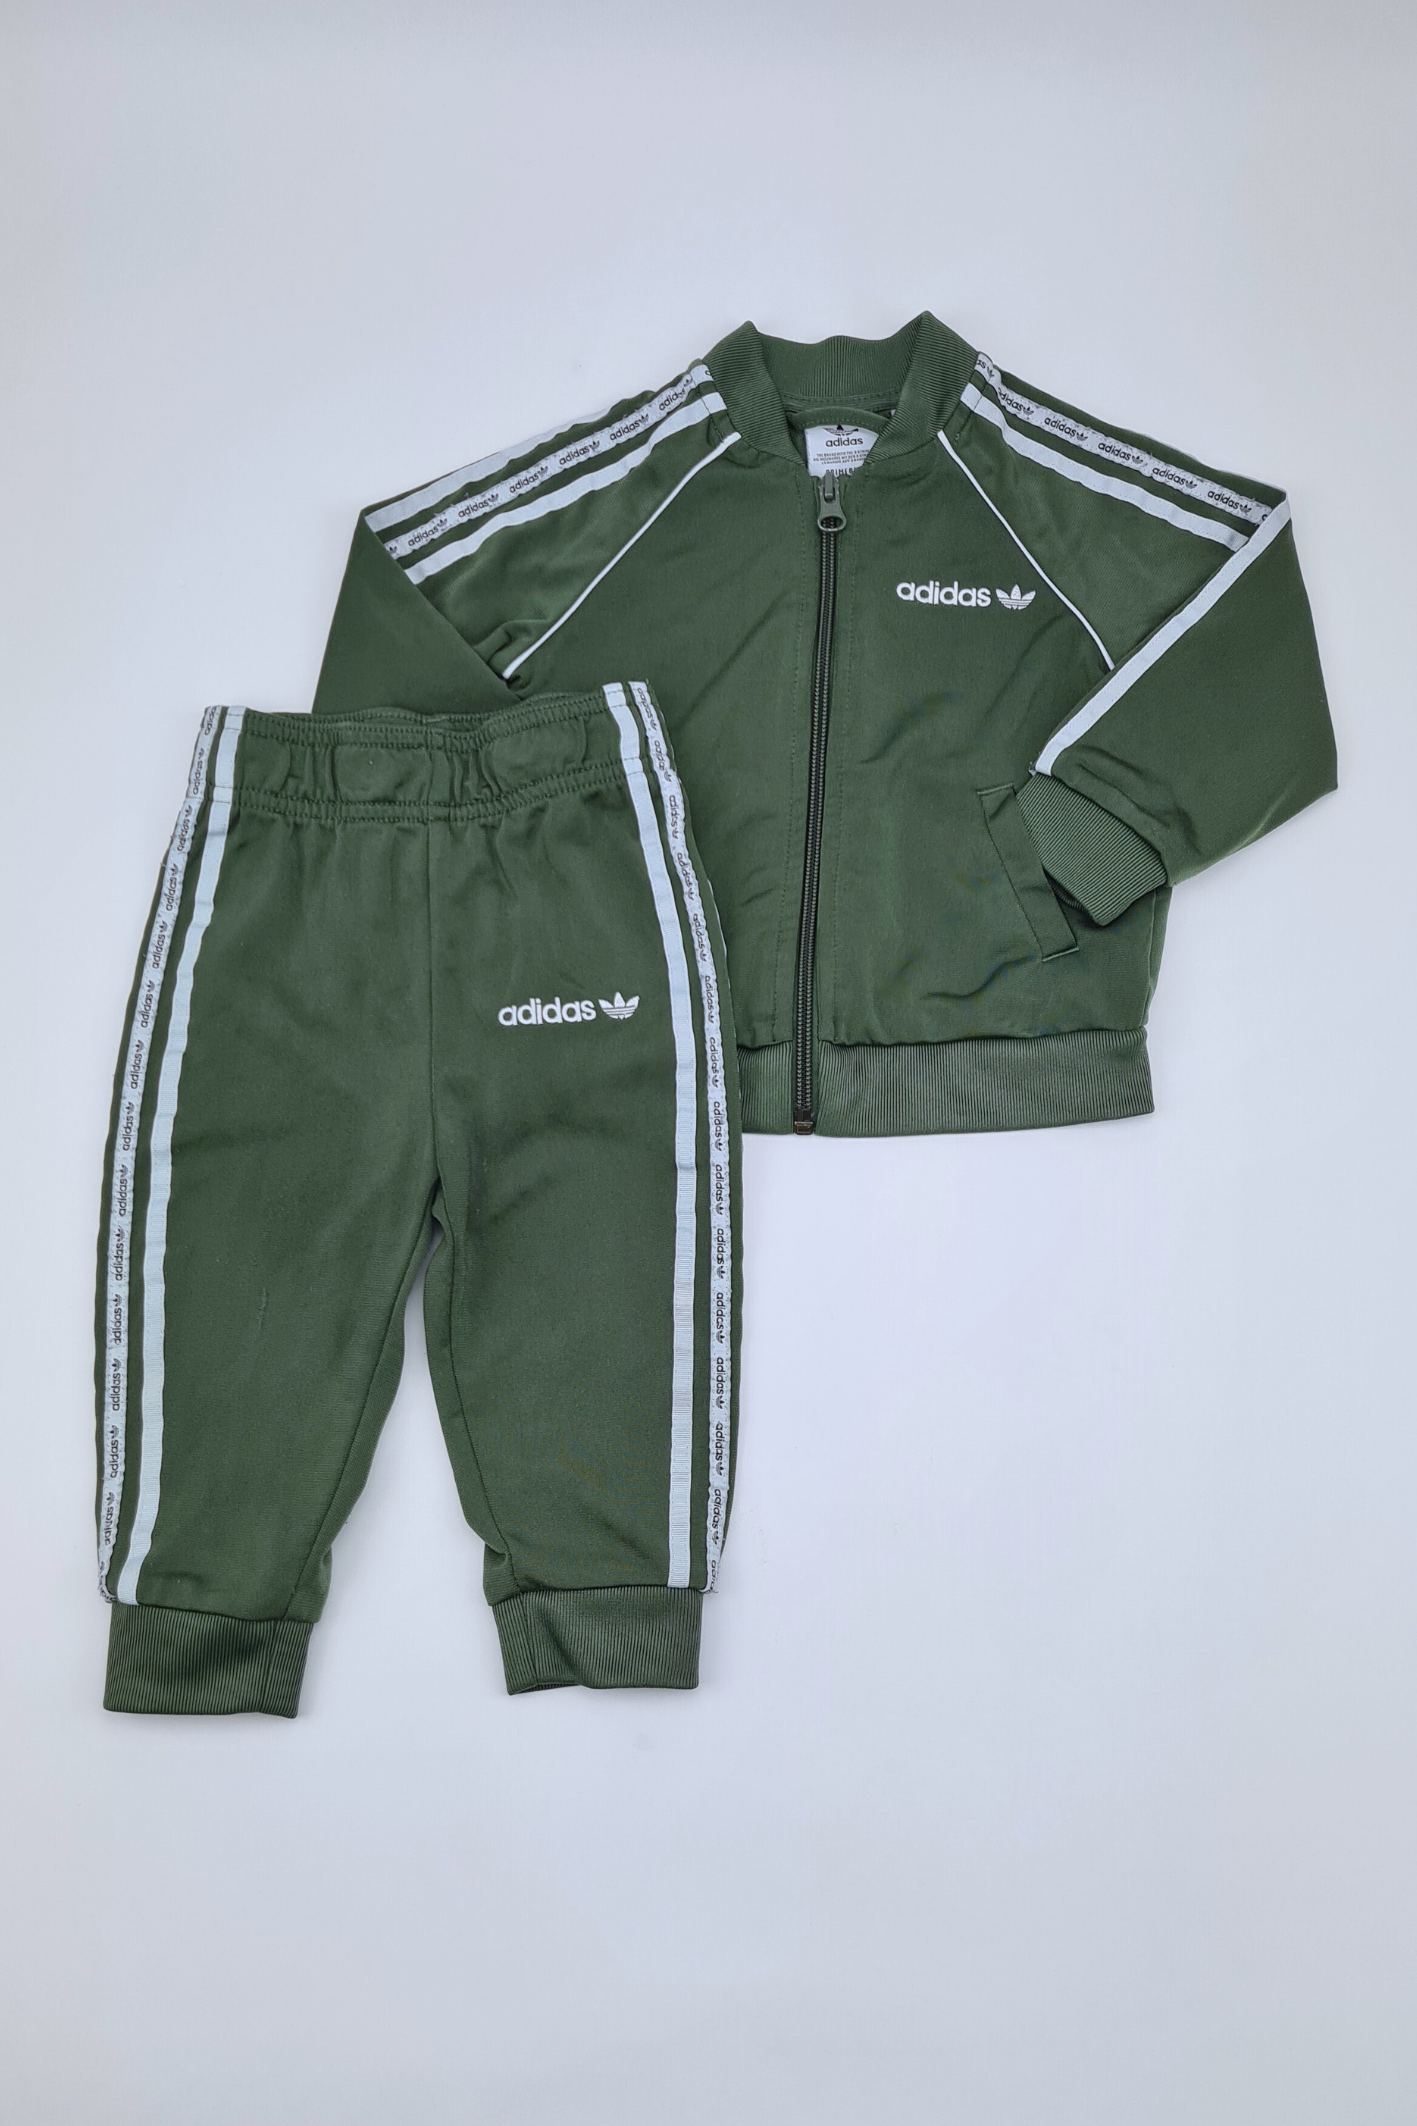 9-12m - Green Adidas Track Suit (MessyDays)